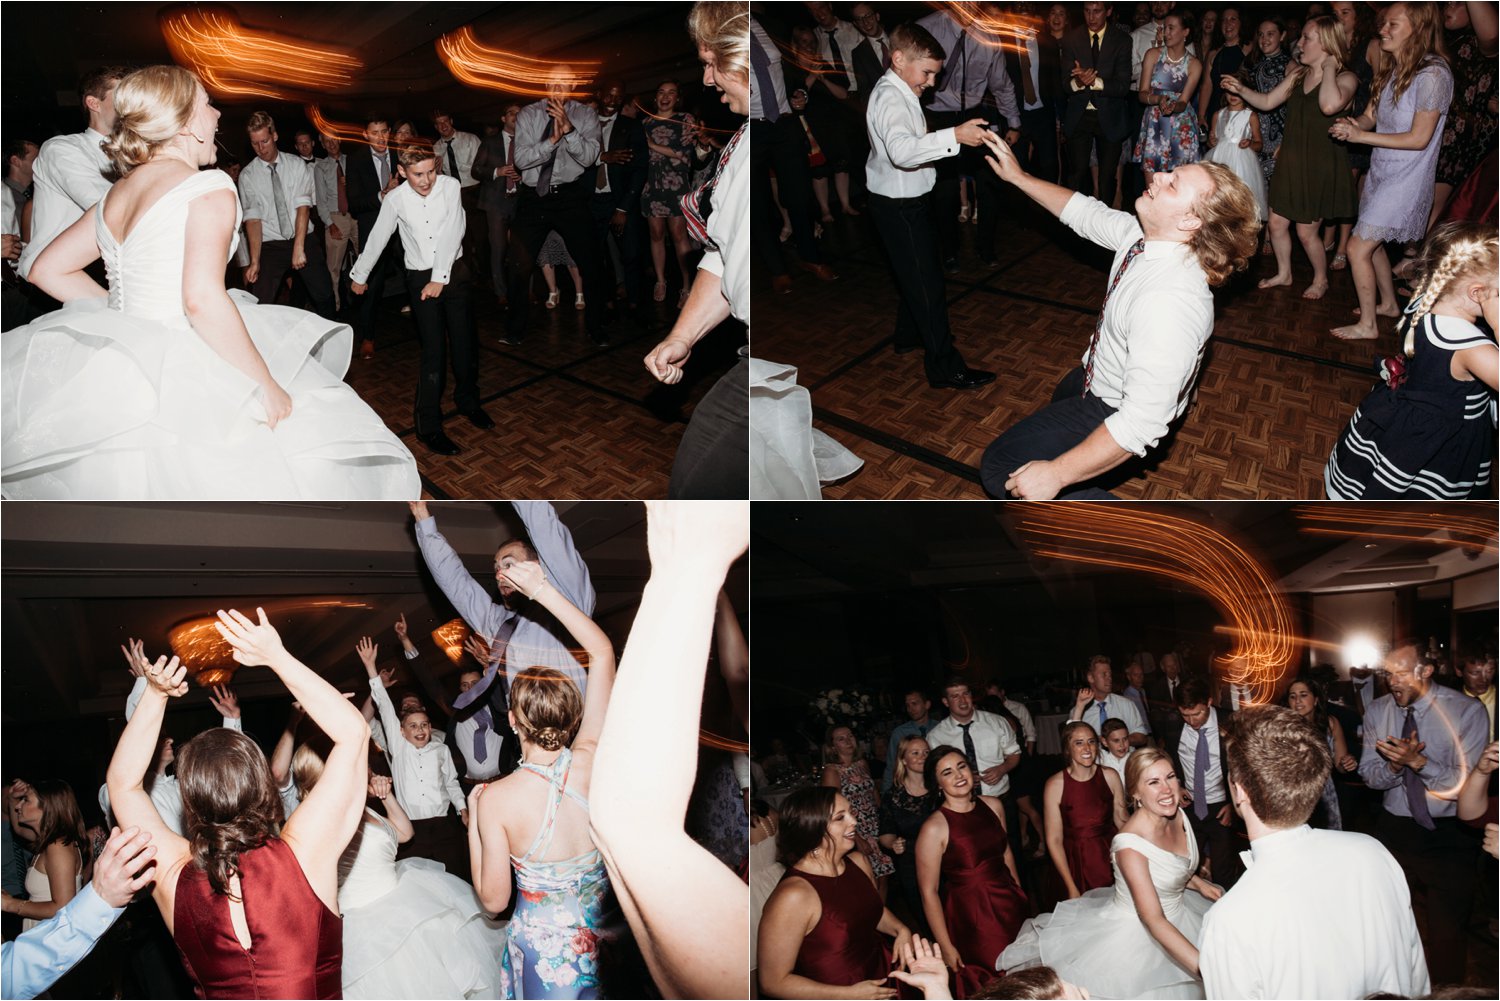  images by feliciathephotographer.com | destination wedding photographer | kansas city | summertime | classic | dance floor | party | dj lights | laughter | singing | bride and groom | 